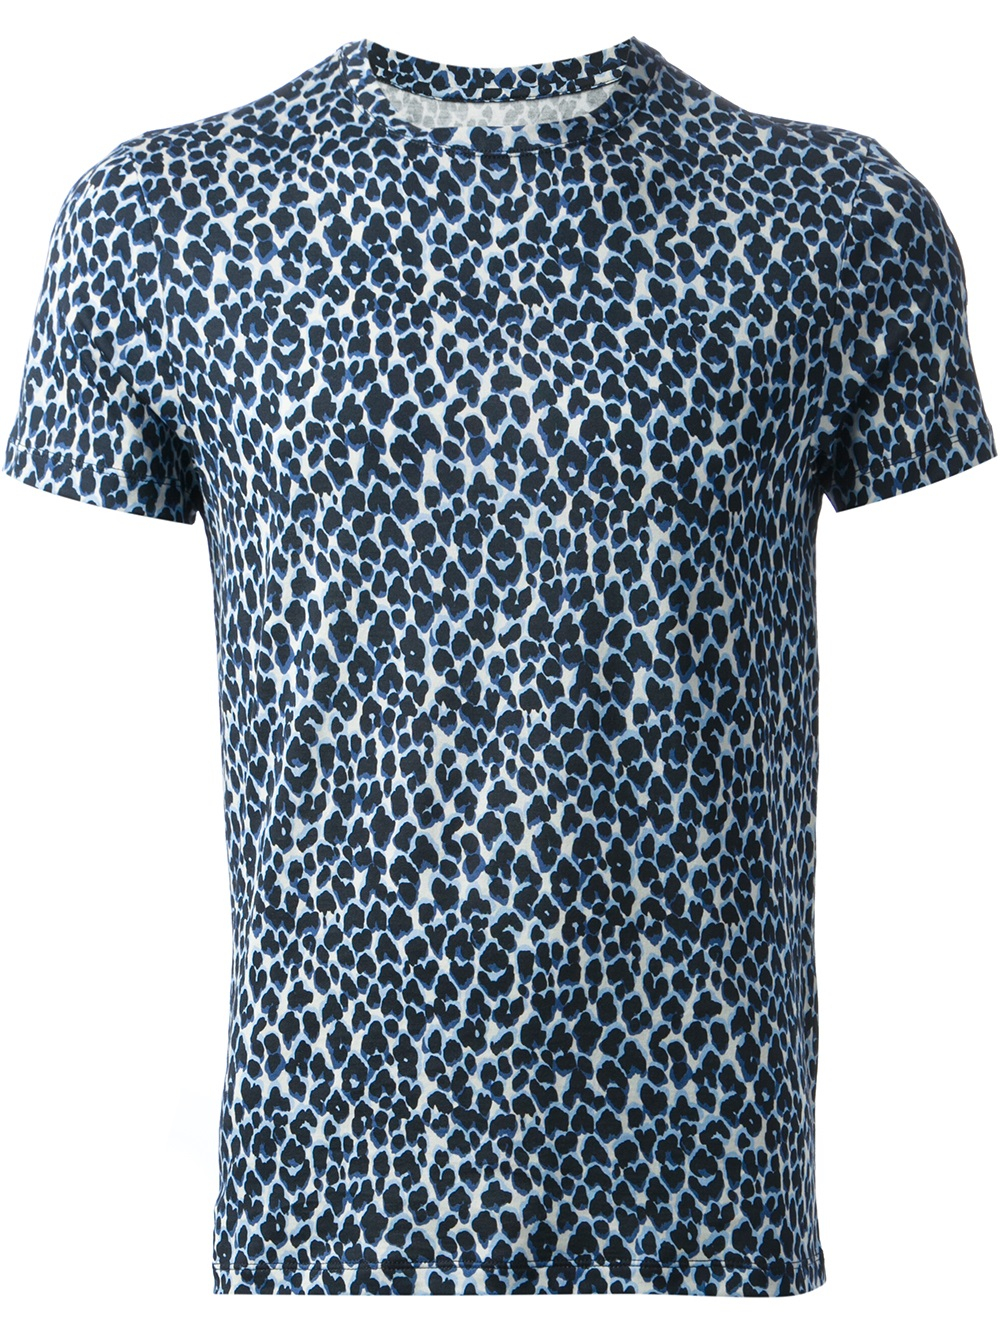 Lyst - Moncler Leopard Print T-Shirt in Blue for Men